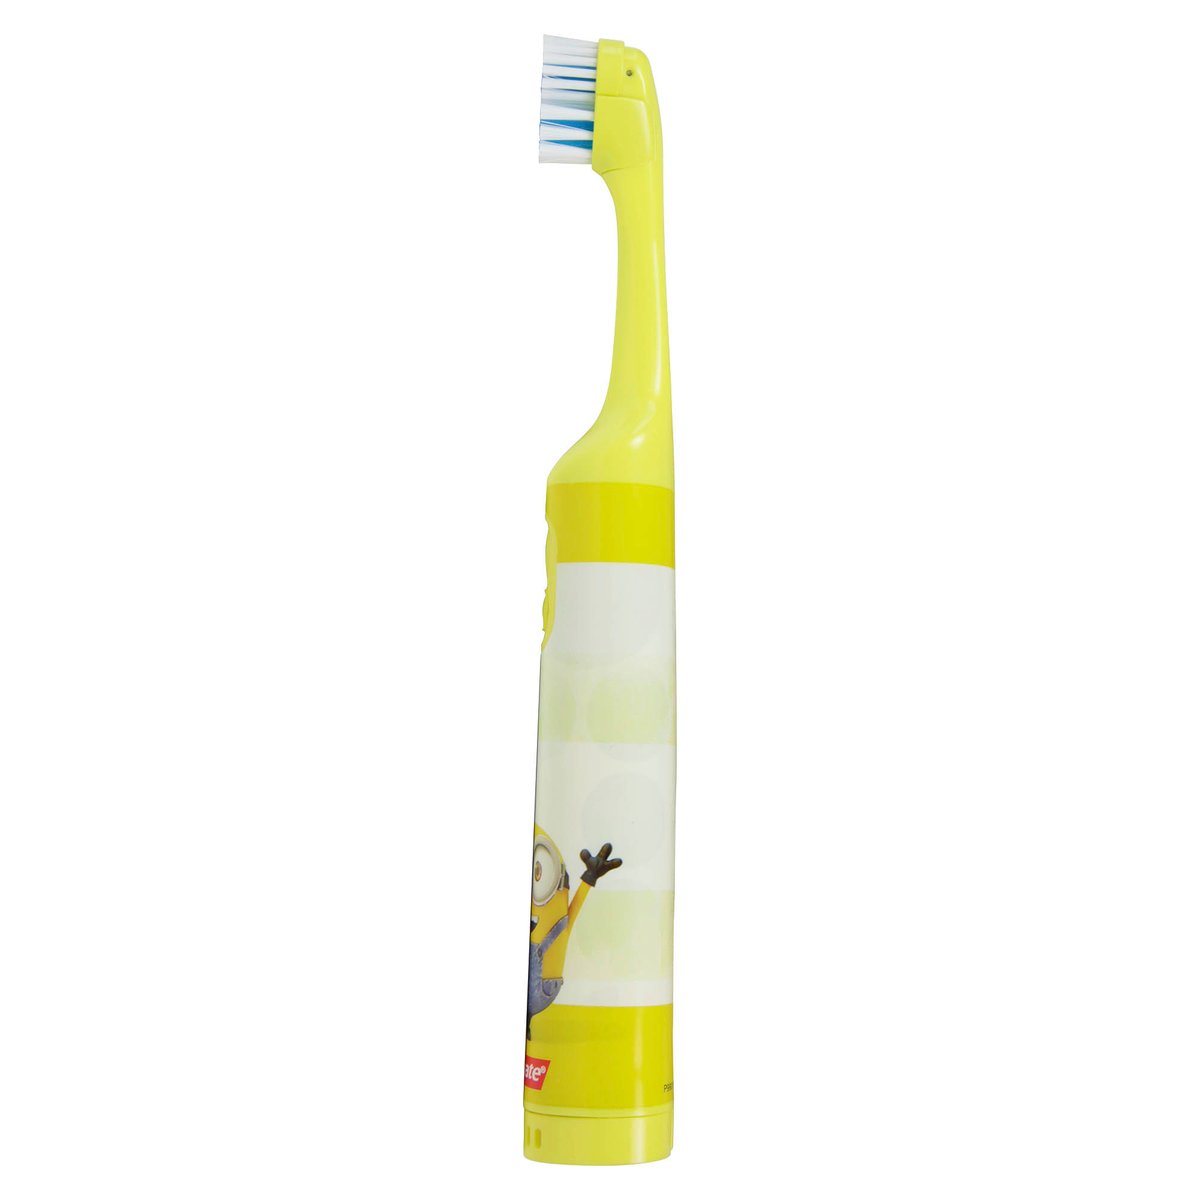 Colgate Powered Toothbrush Kids Extra Soft Minions 1 pc